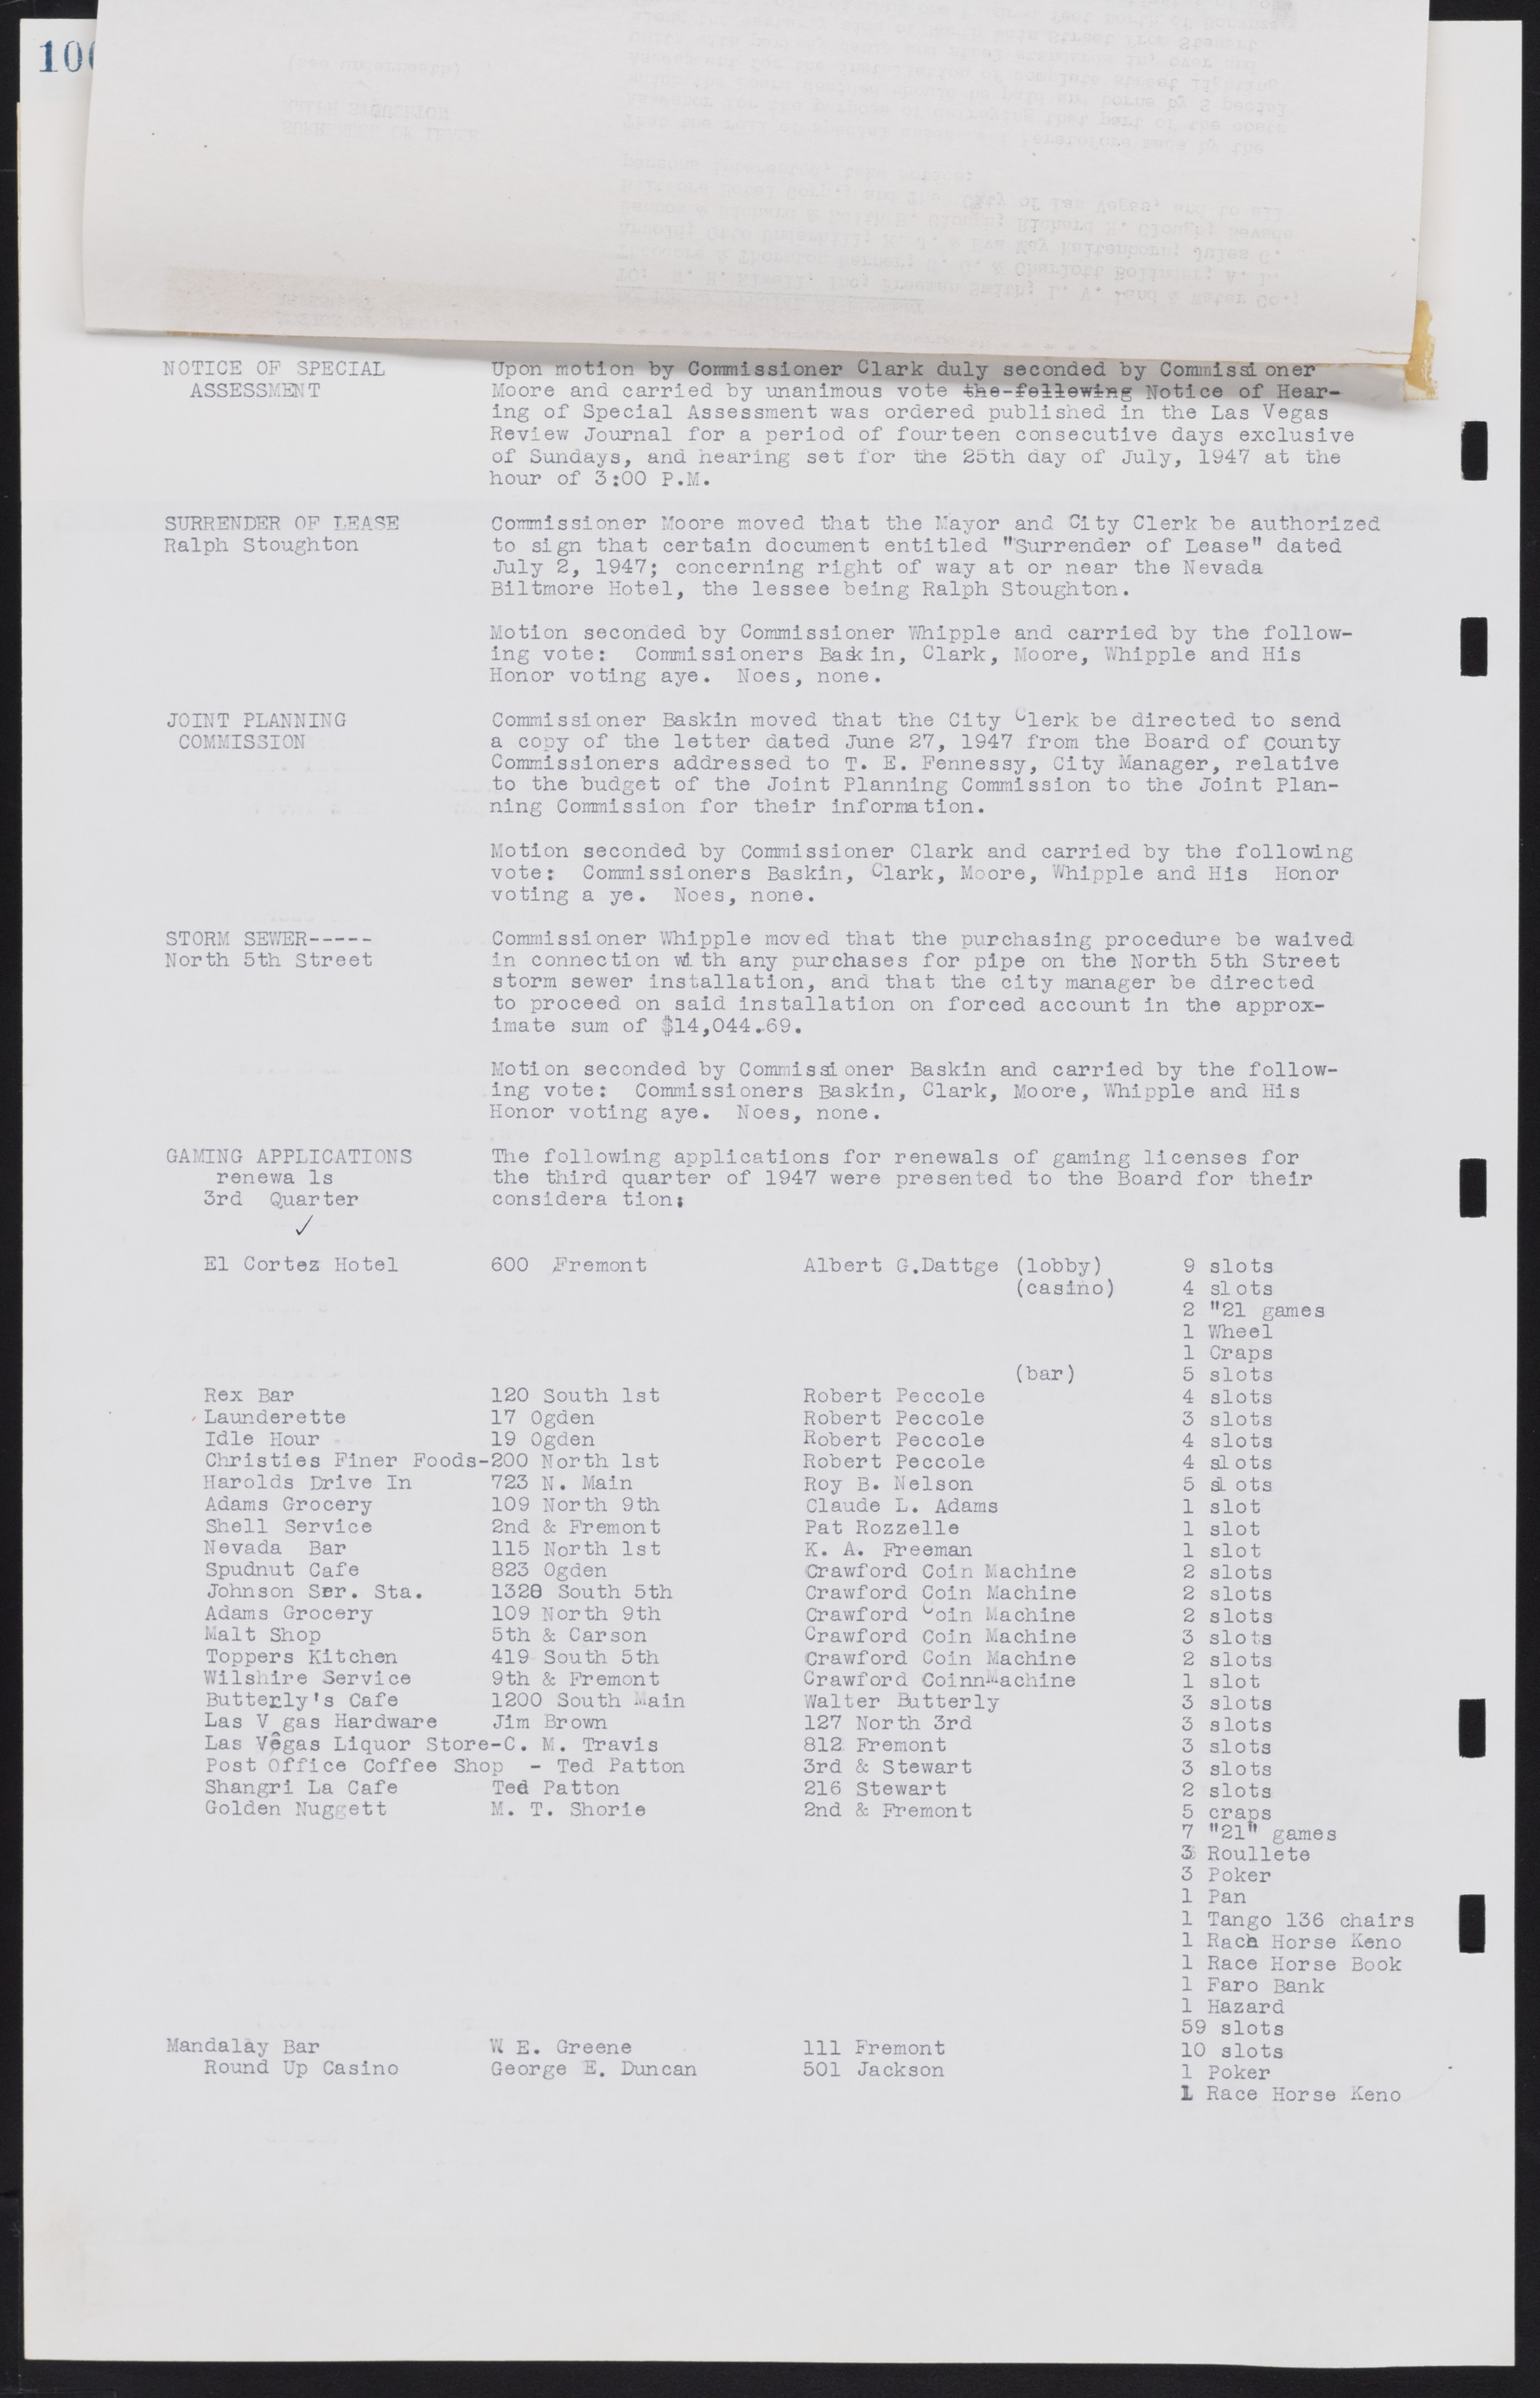 Las Vegas City Commission Minutes, January 7, 1947 to October 26, 1949, lvc000006-118